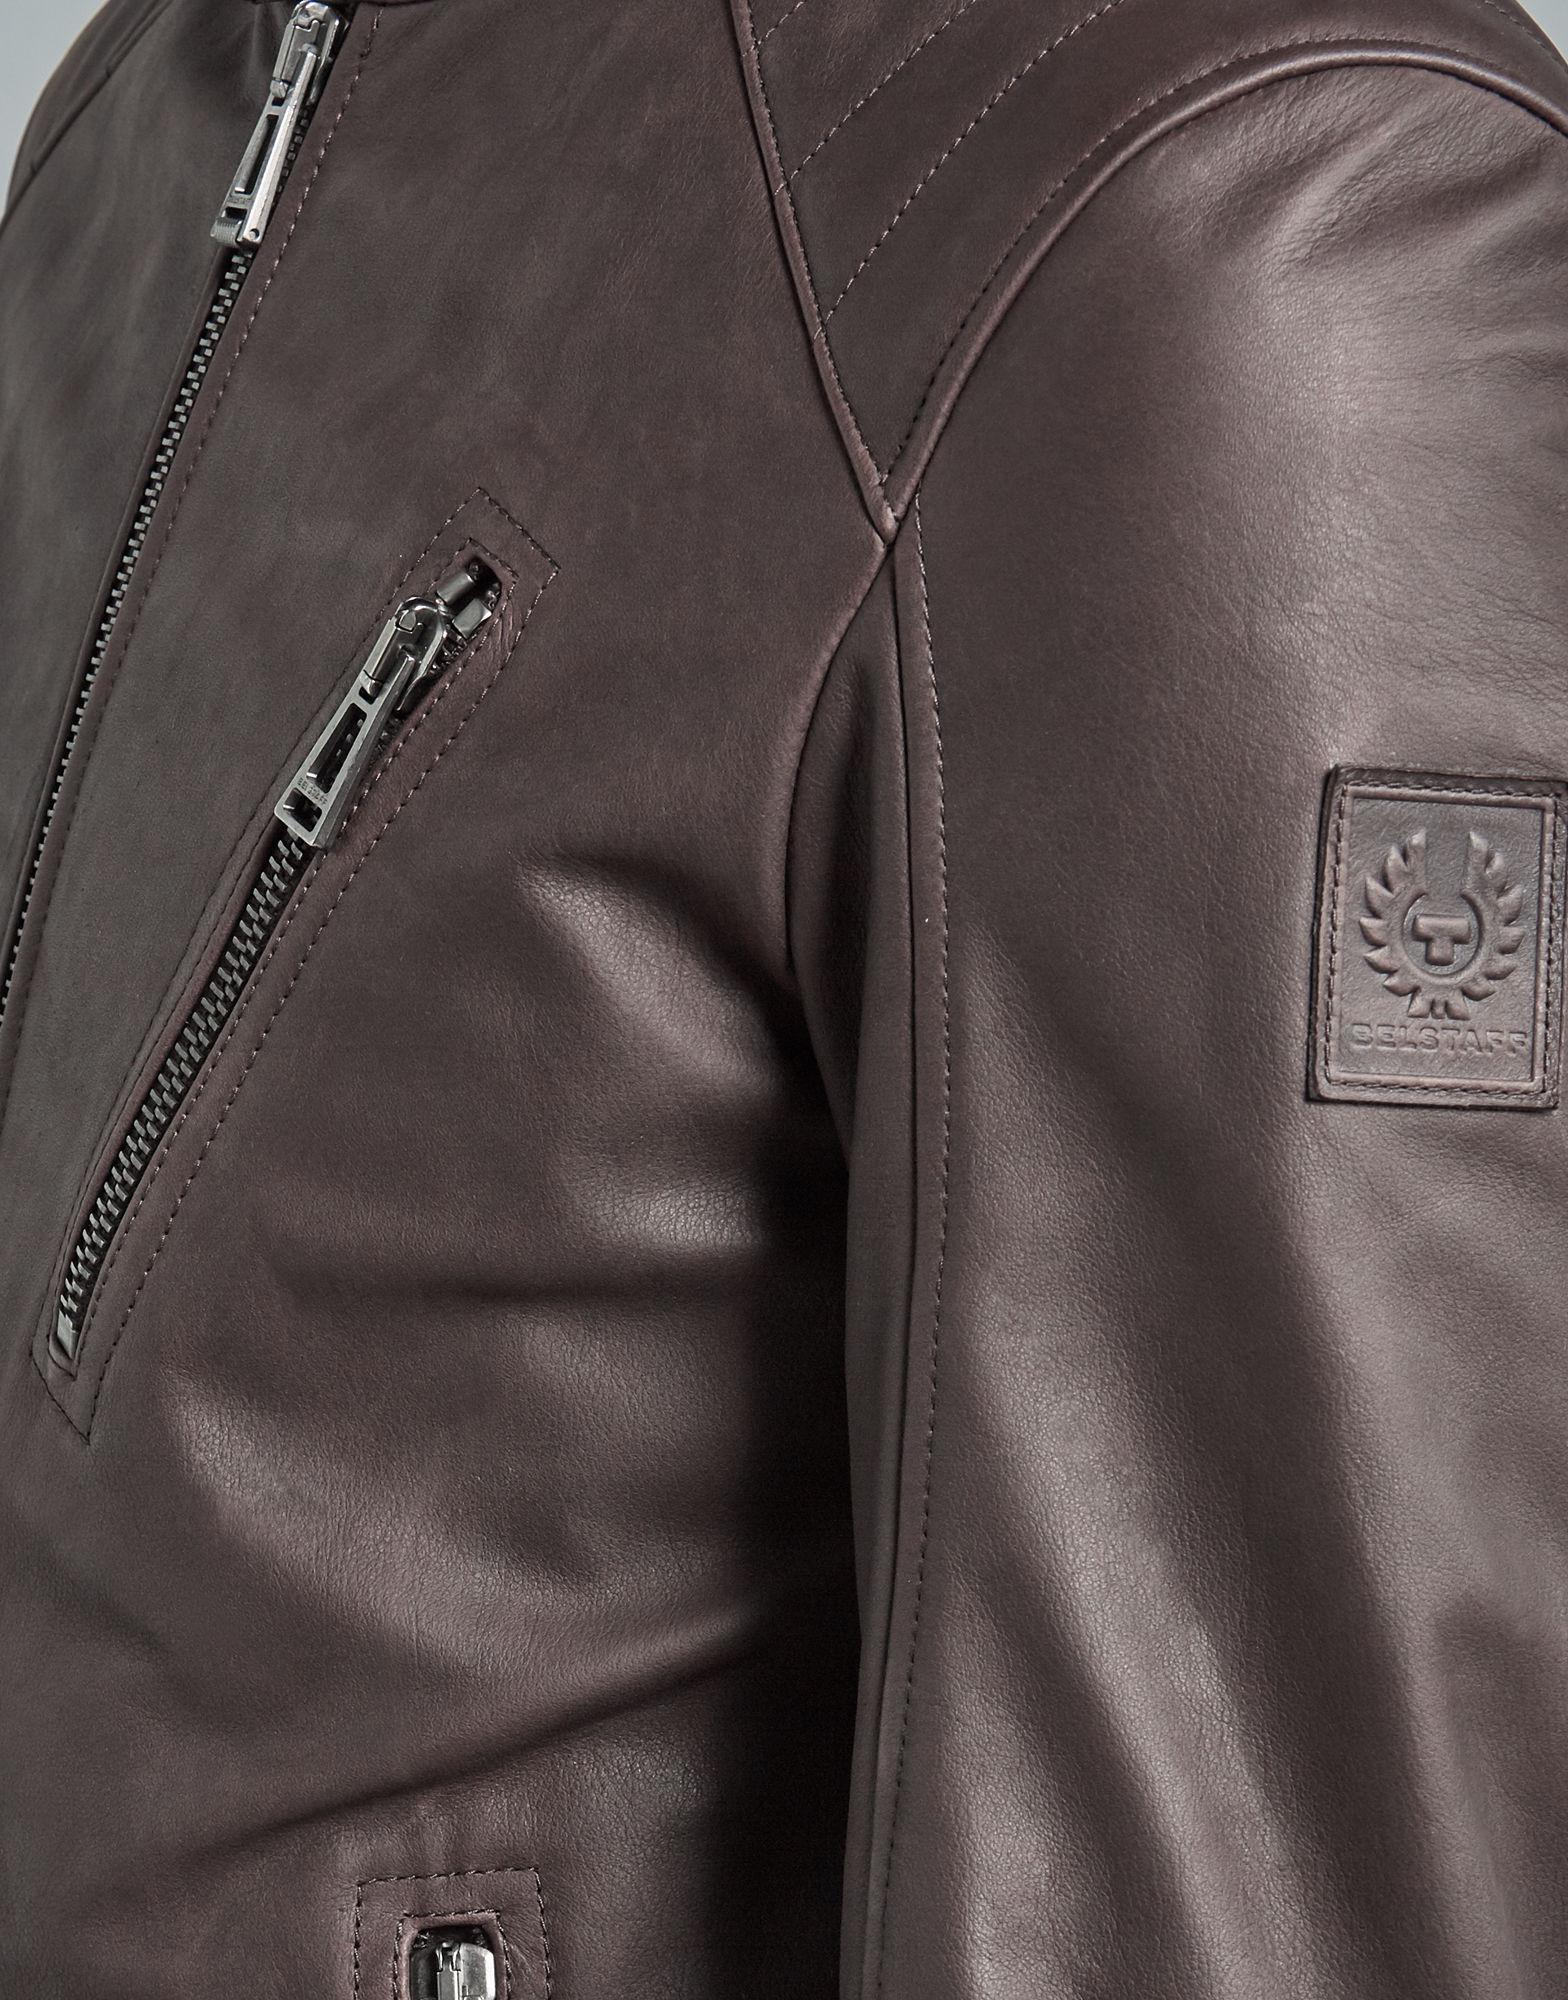 Belstaff Leather Haslingfield Café Racer Jacket in Dark Brown (Brown) for  Men - Lyst